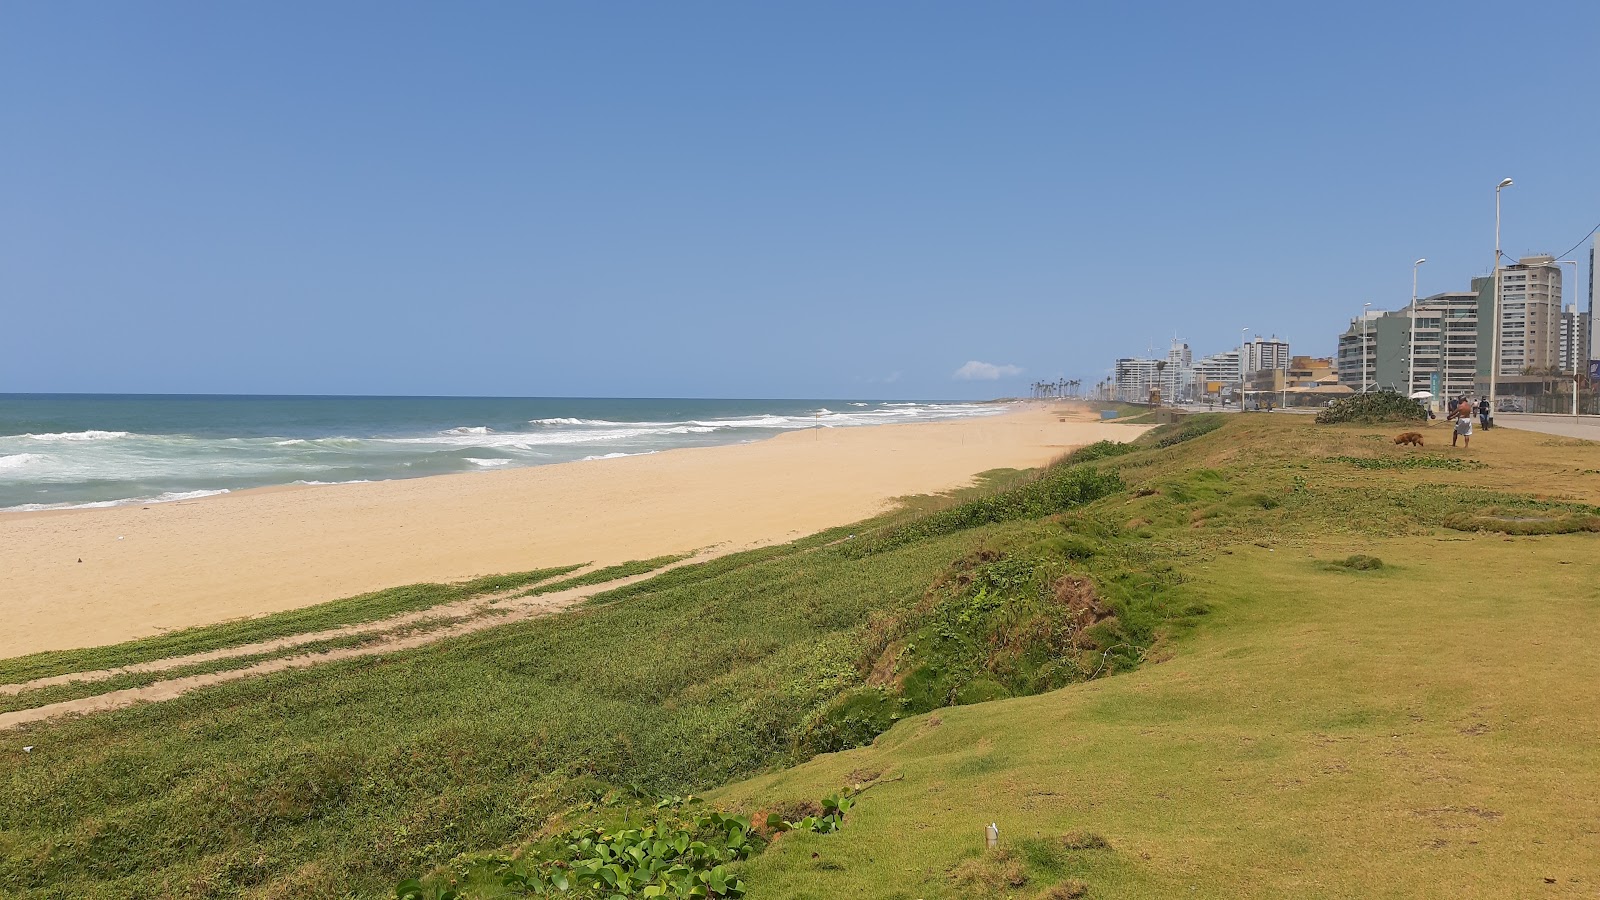 Foto af Praia de Armacao faciliteter område